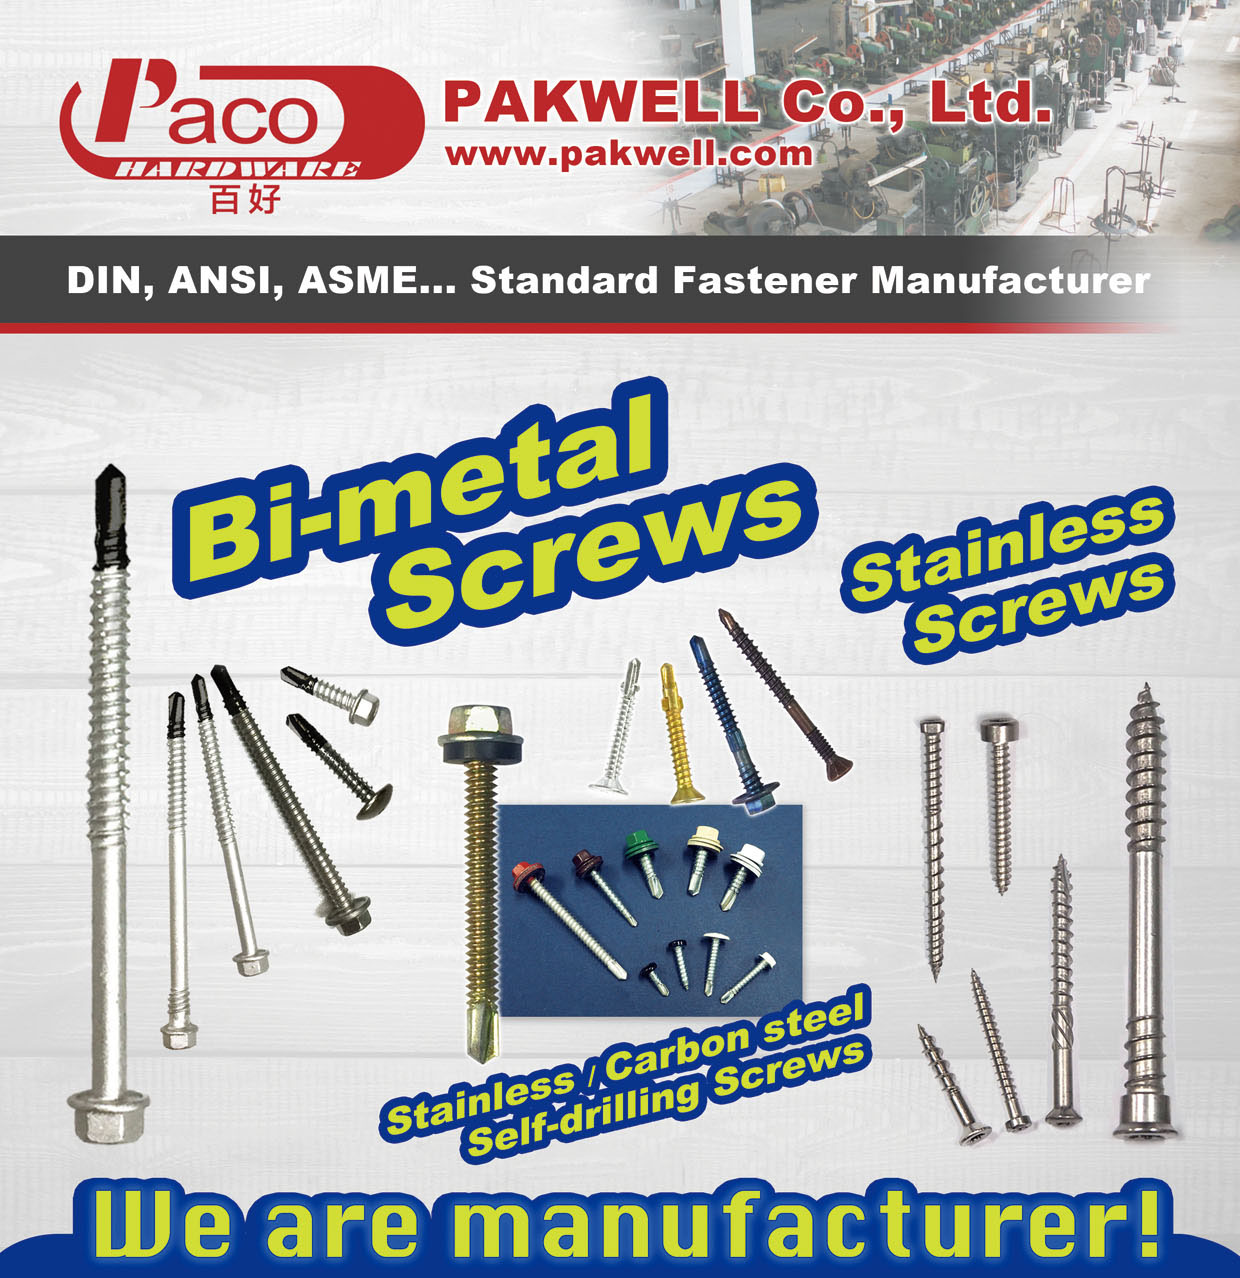 PAKWELL CO., LTD. , Bi-Metal Screws, Stainless Screws, Self-drilling Screws , Bi-metal Screw